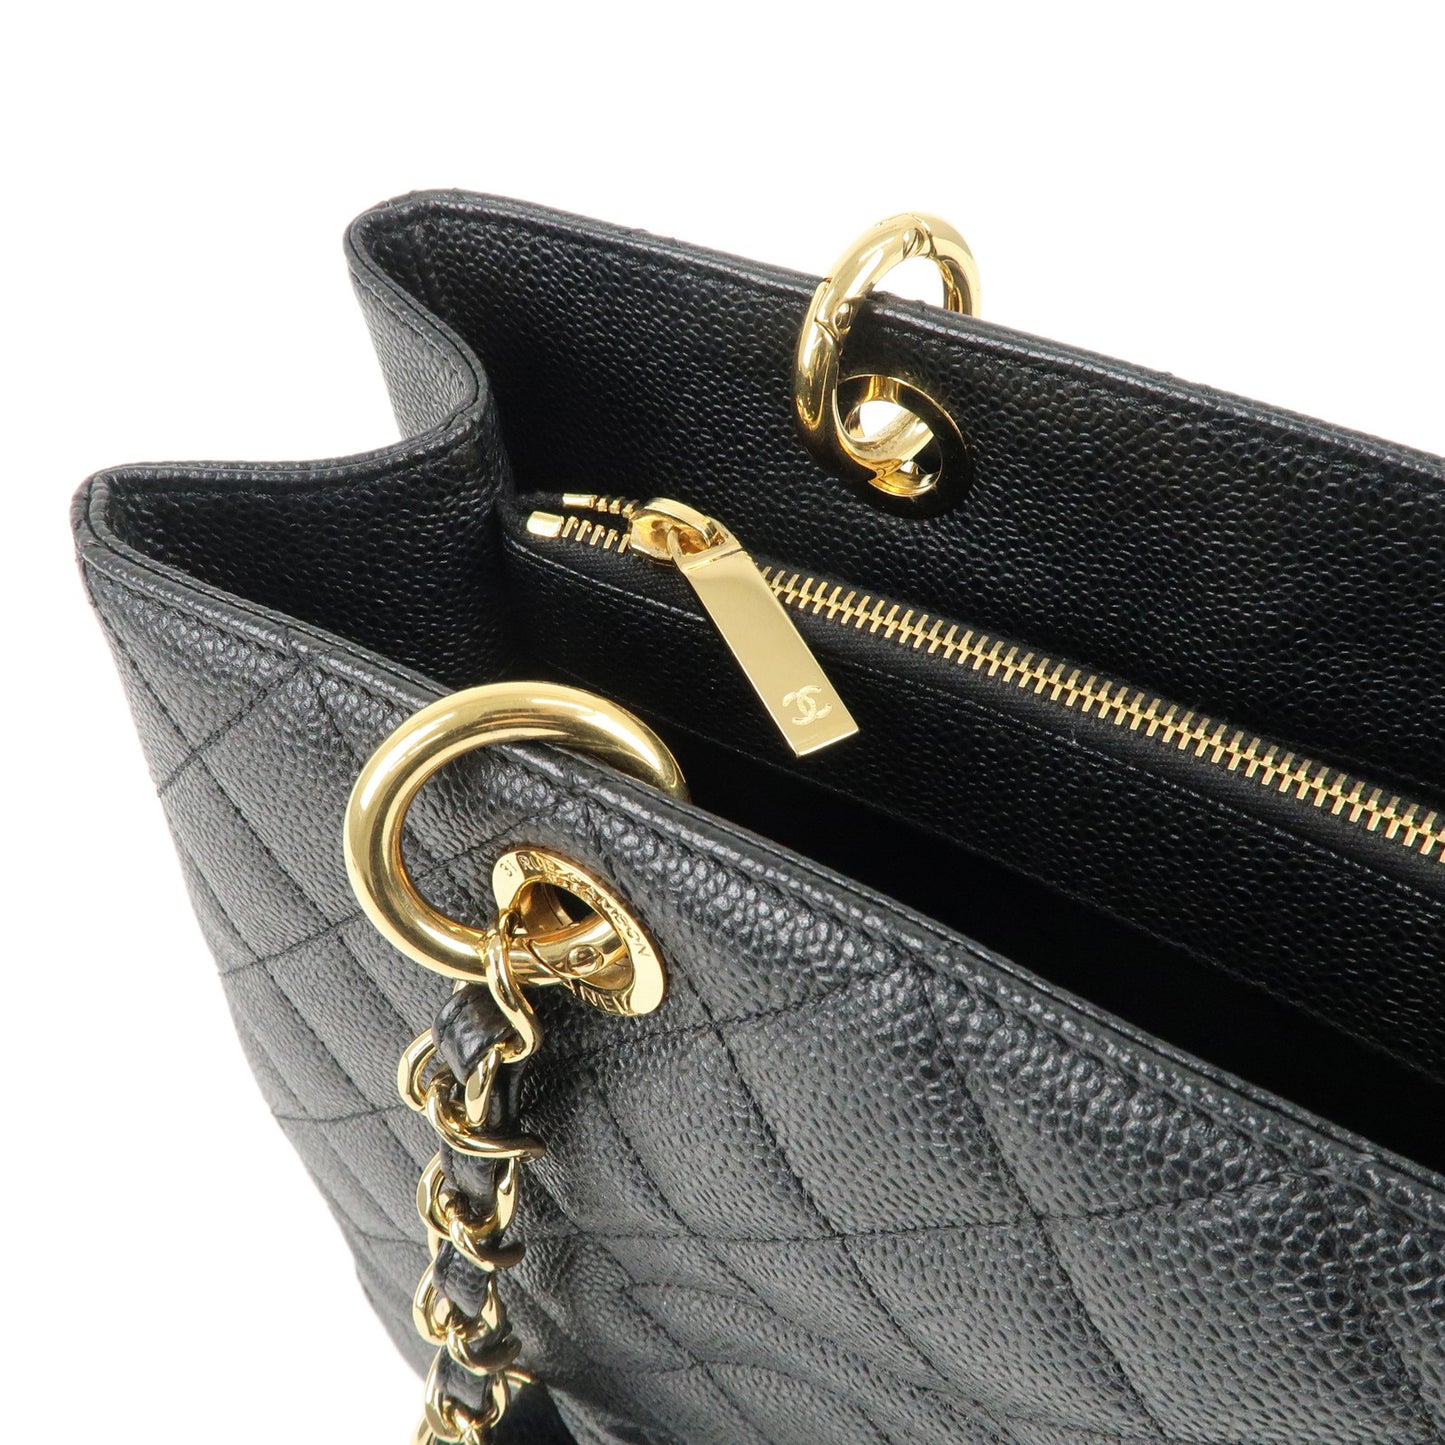 CHANEL Matelasse Caviar Skin GST Chain Tote Bag Black Gold A50995